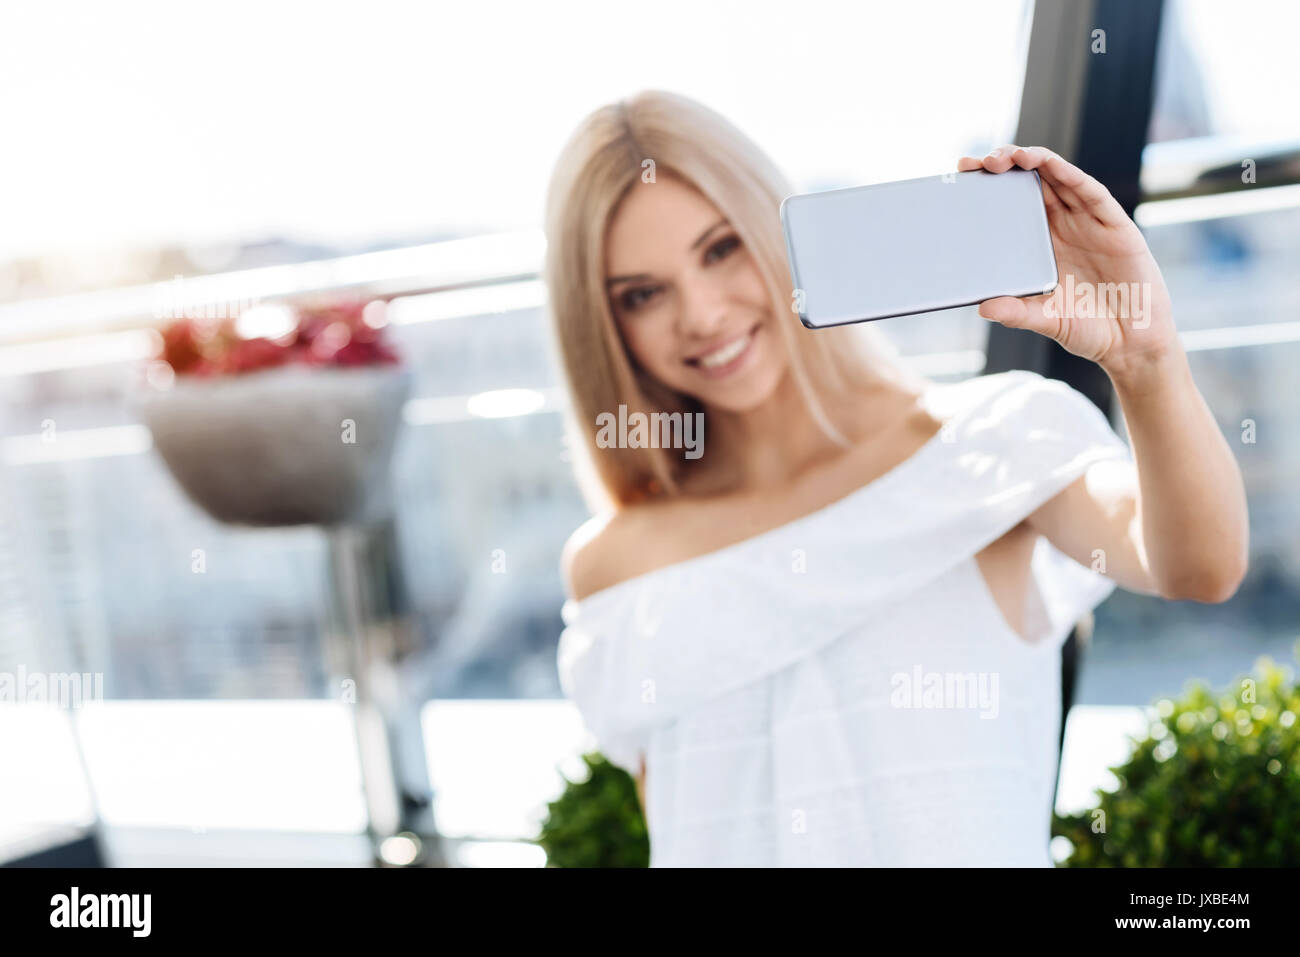 Selective focus of a modern innovative smartphone Stock Photo